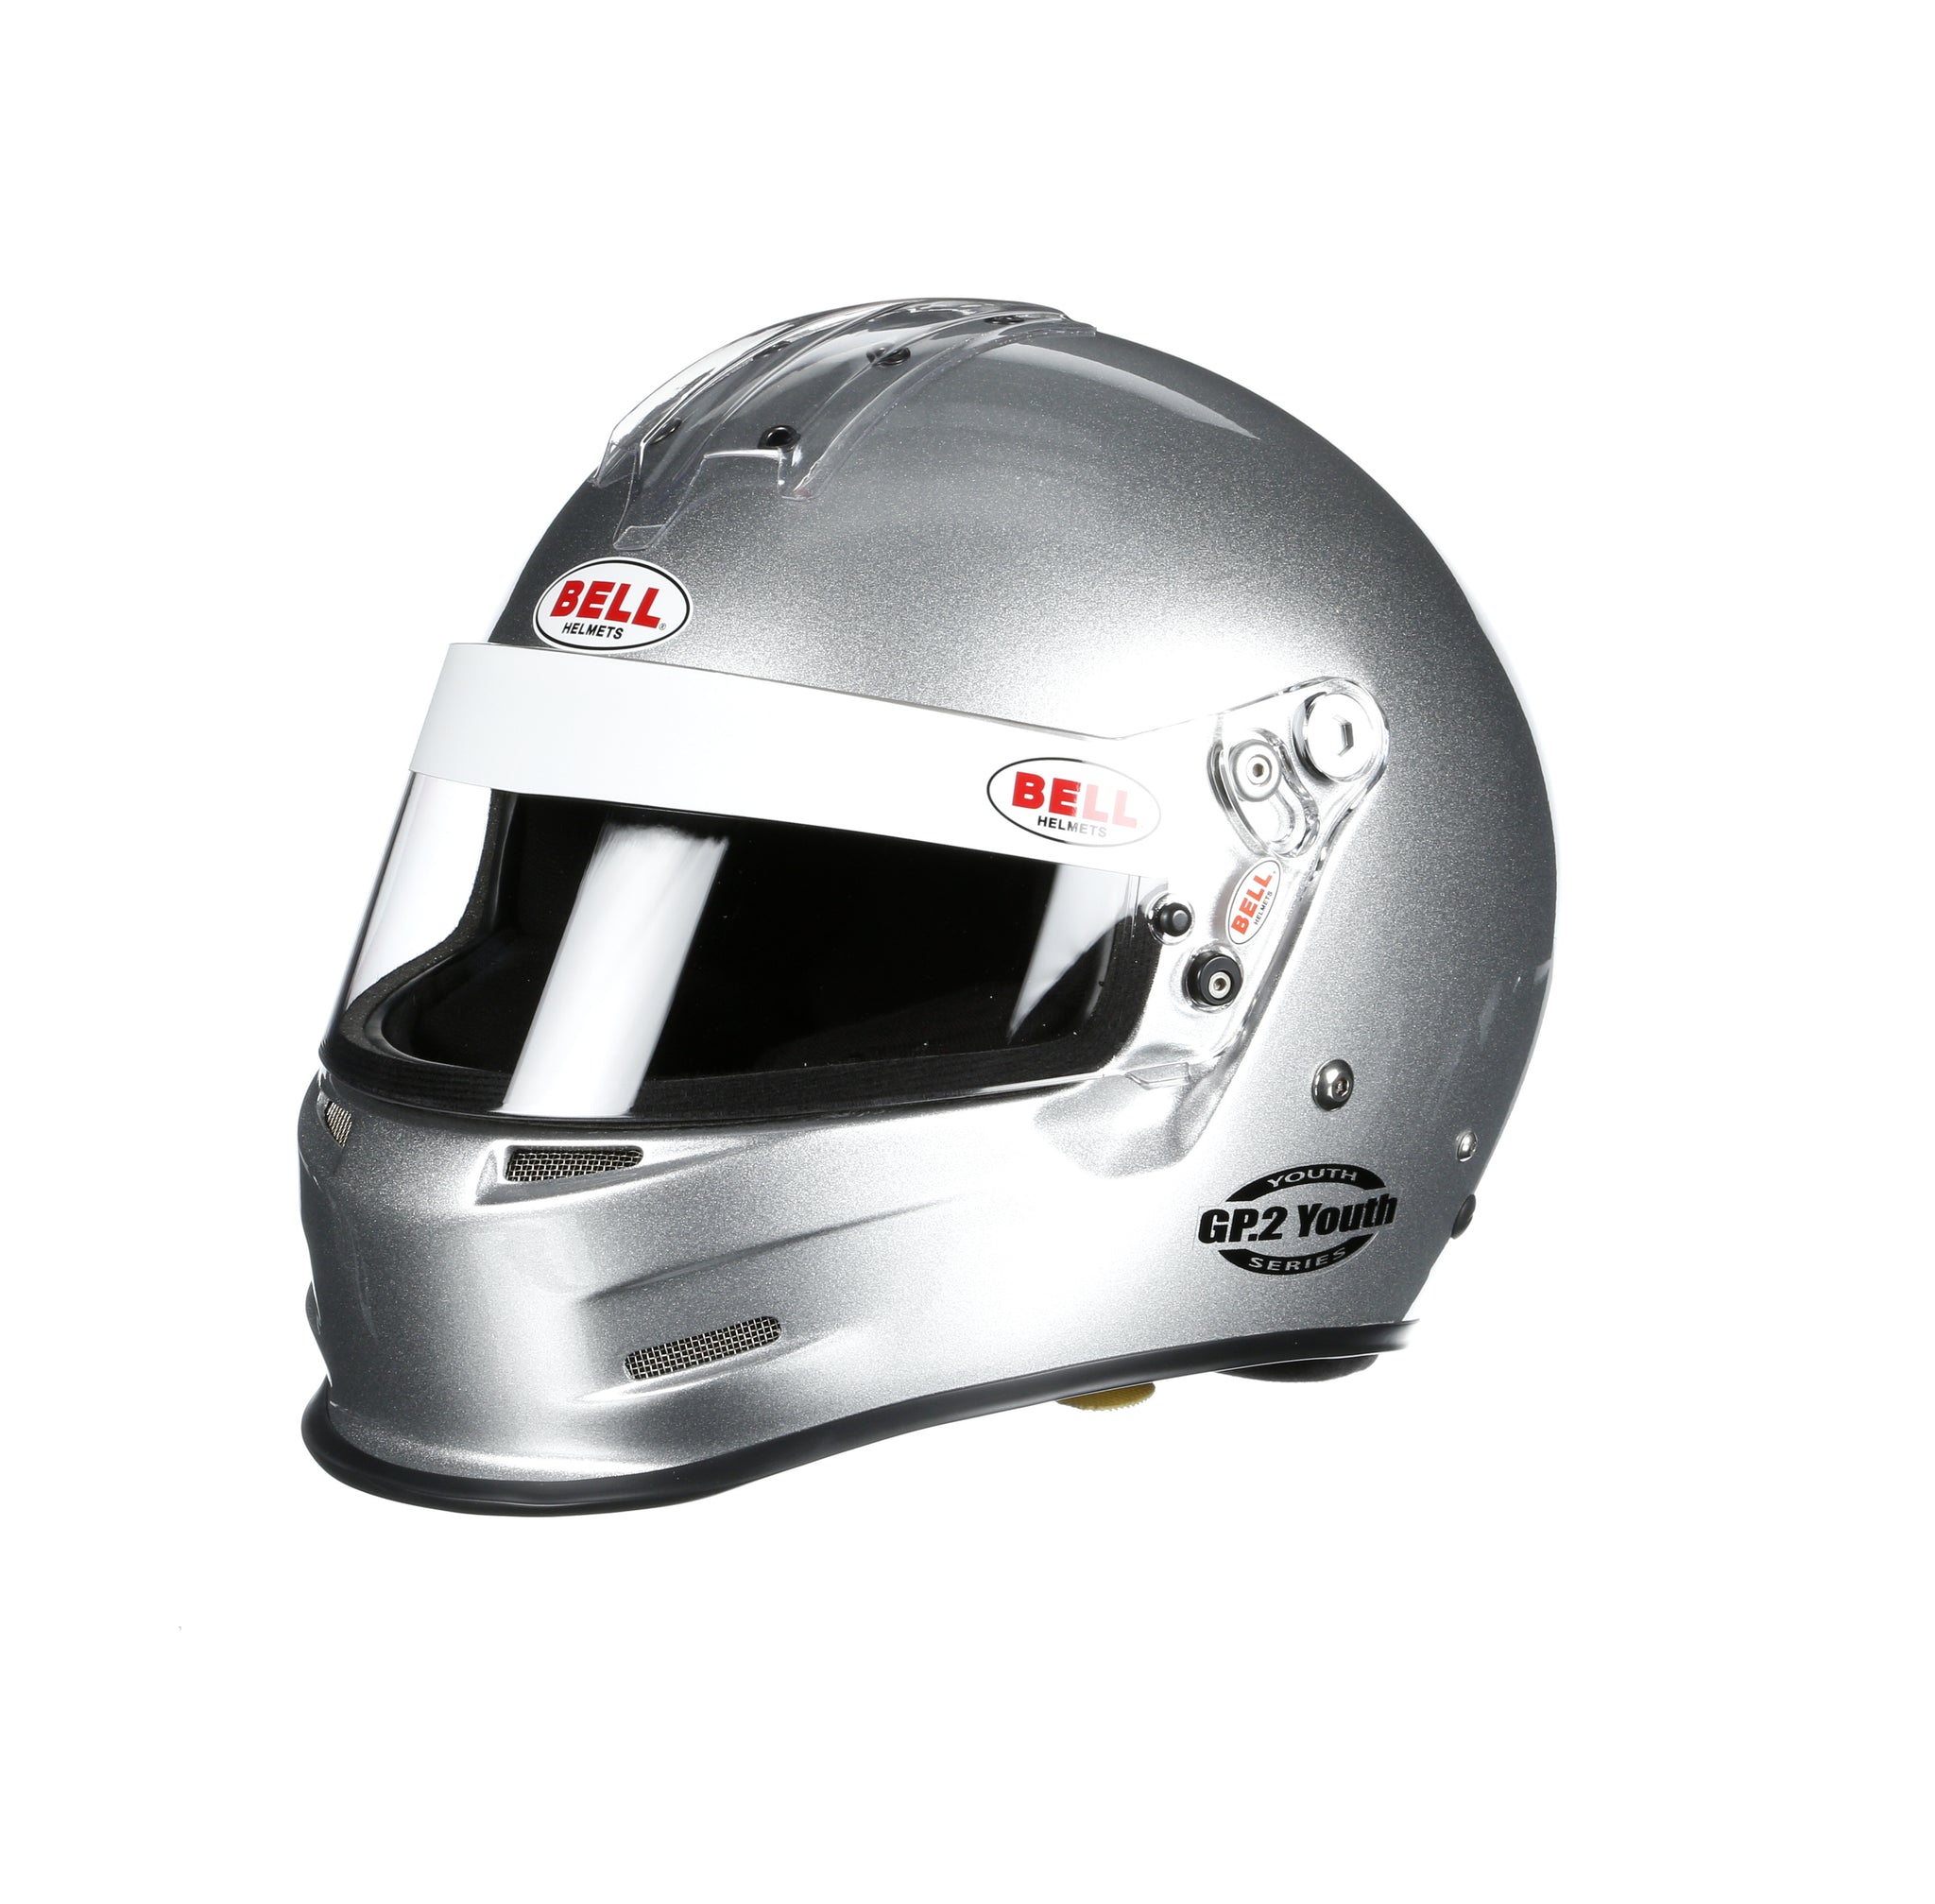 Bell SA2020 GP.2 YOUTH Helmet, SFI24.1 V.15 BRUS